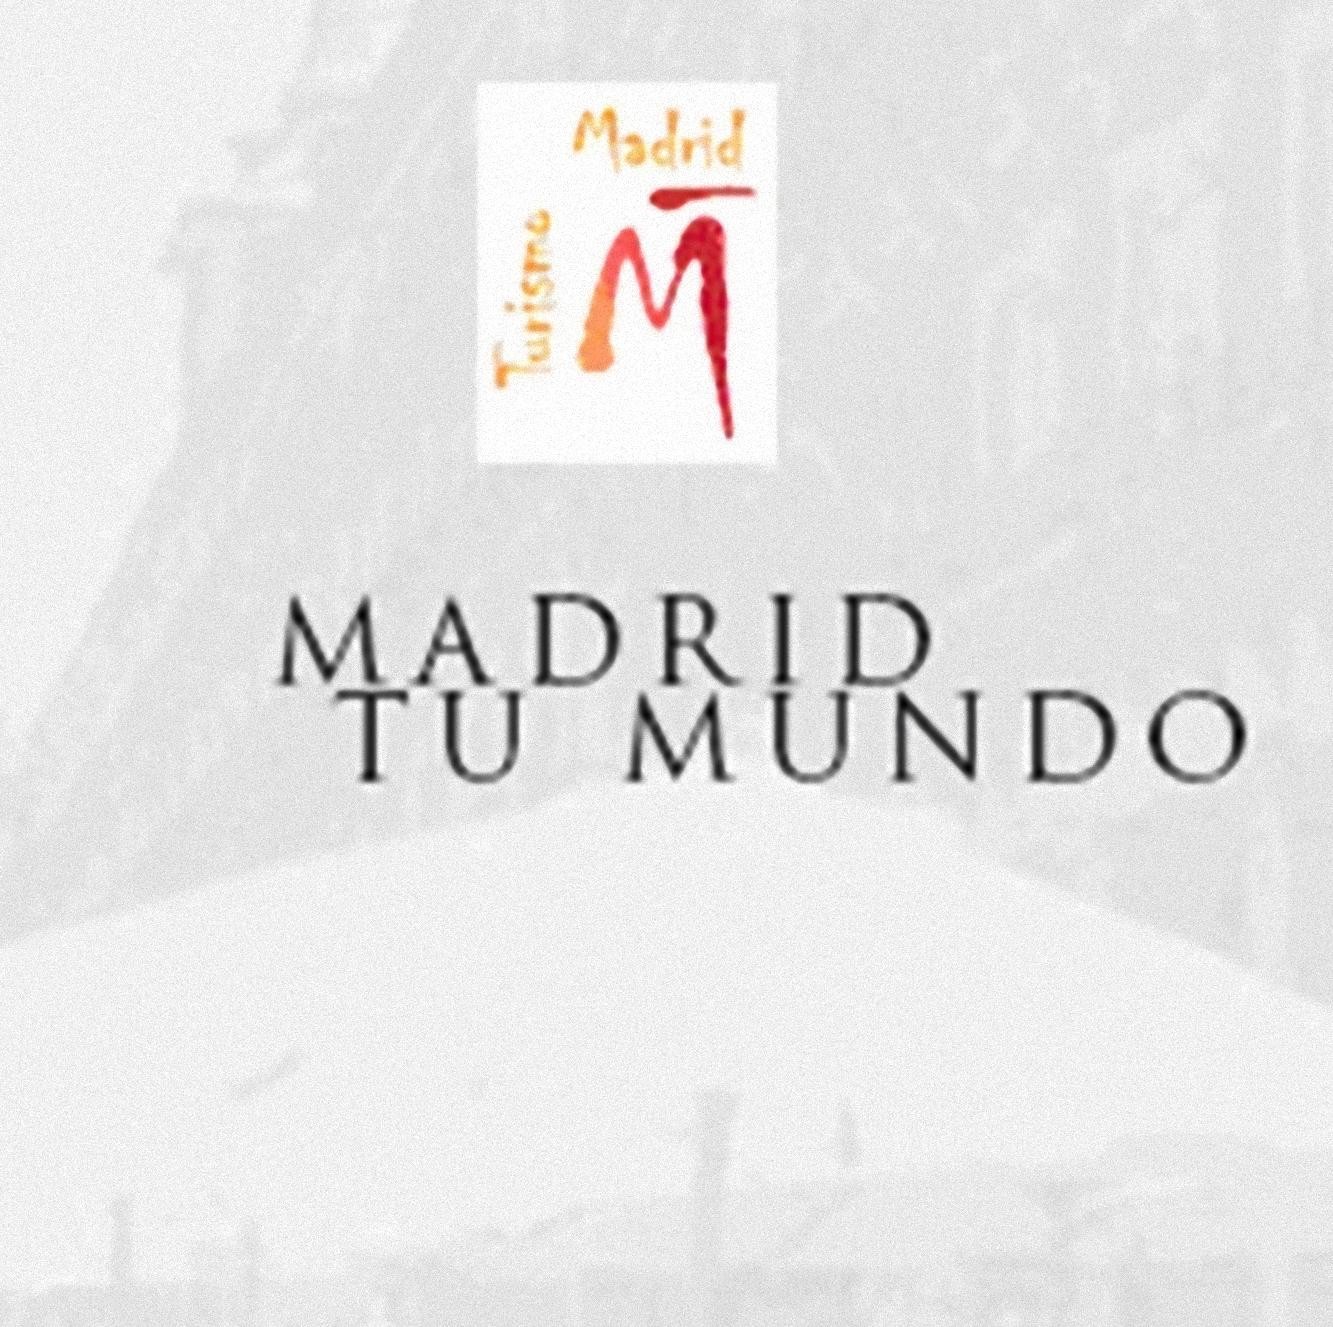 Madrid tu mundo